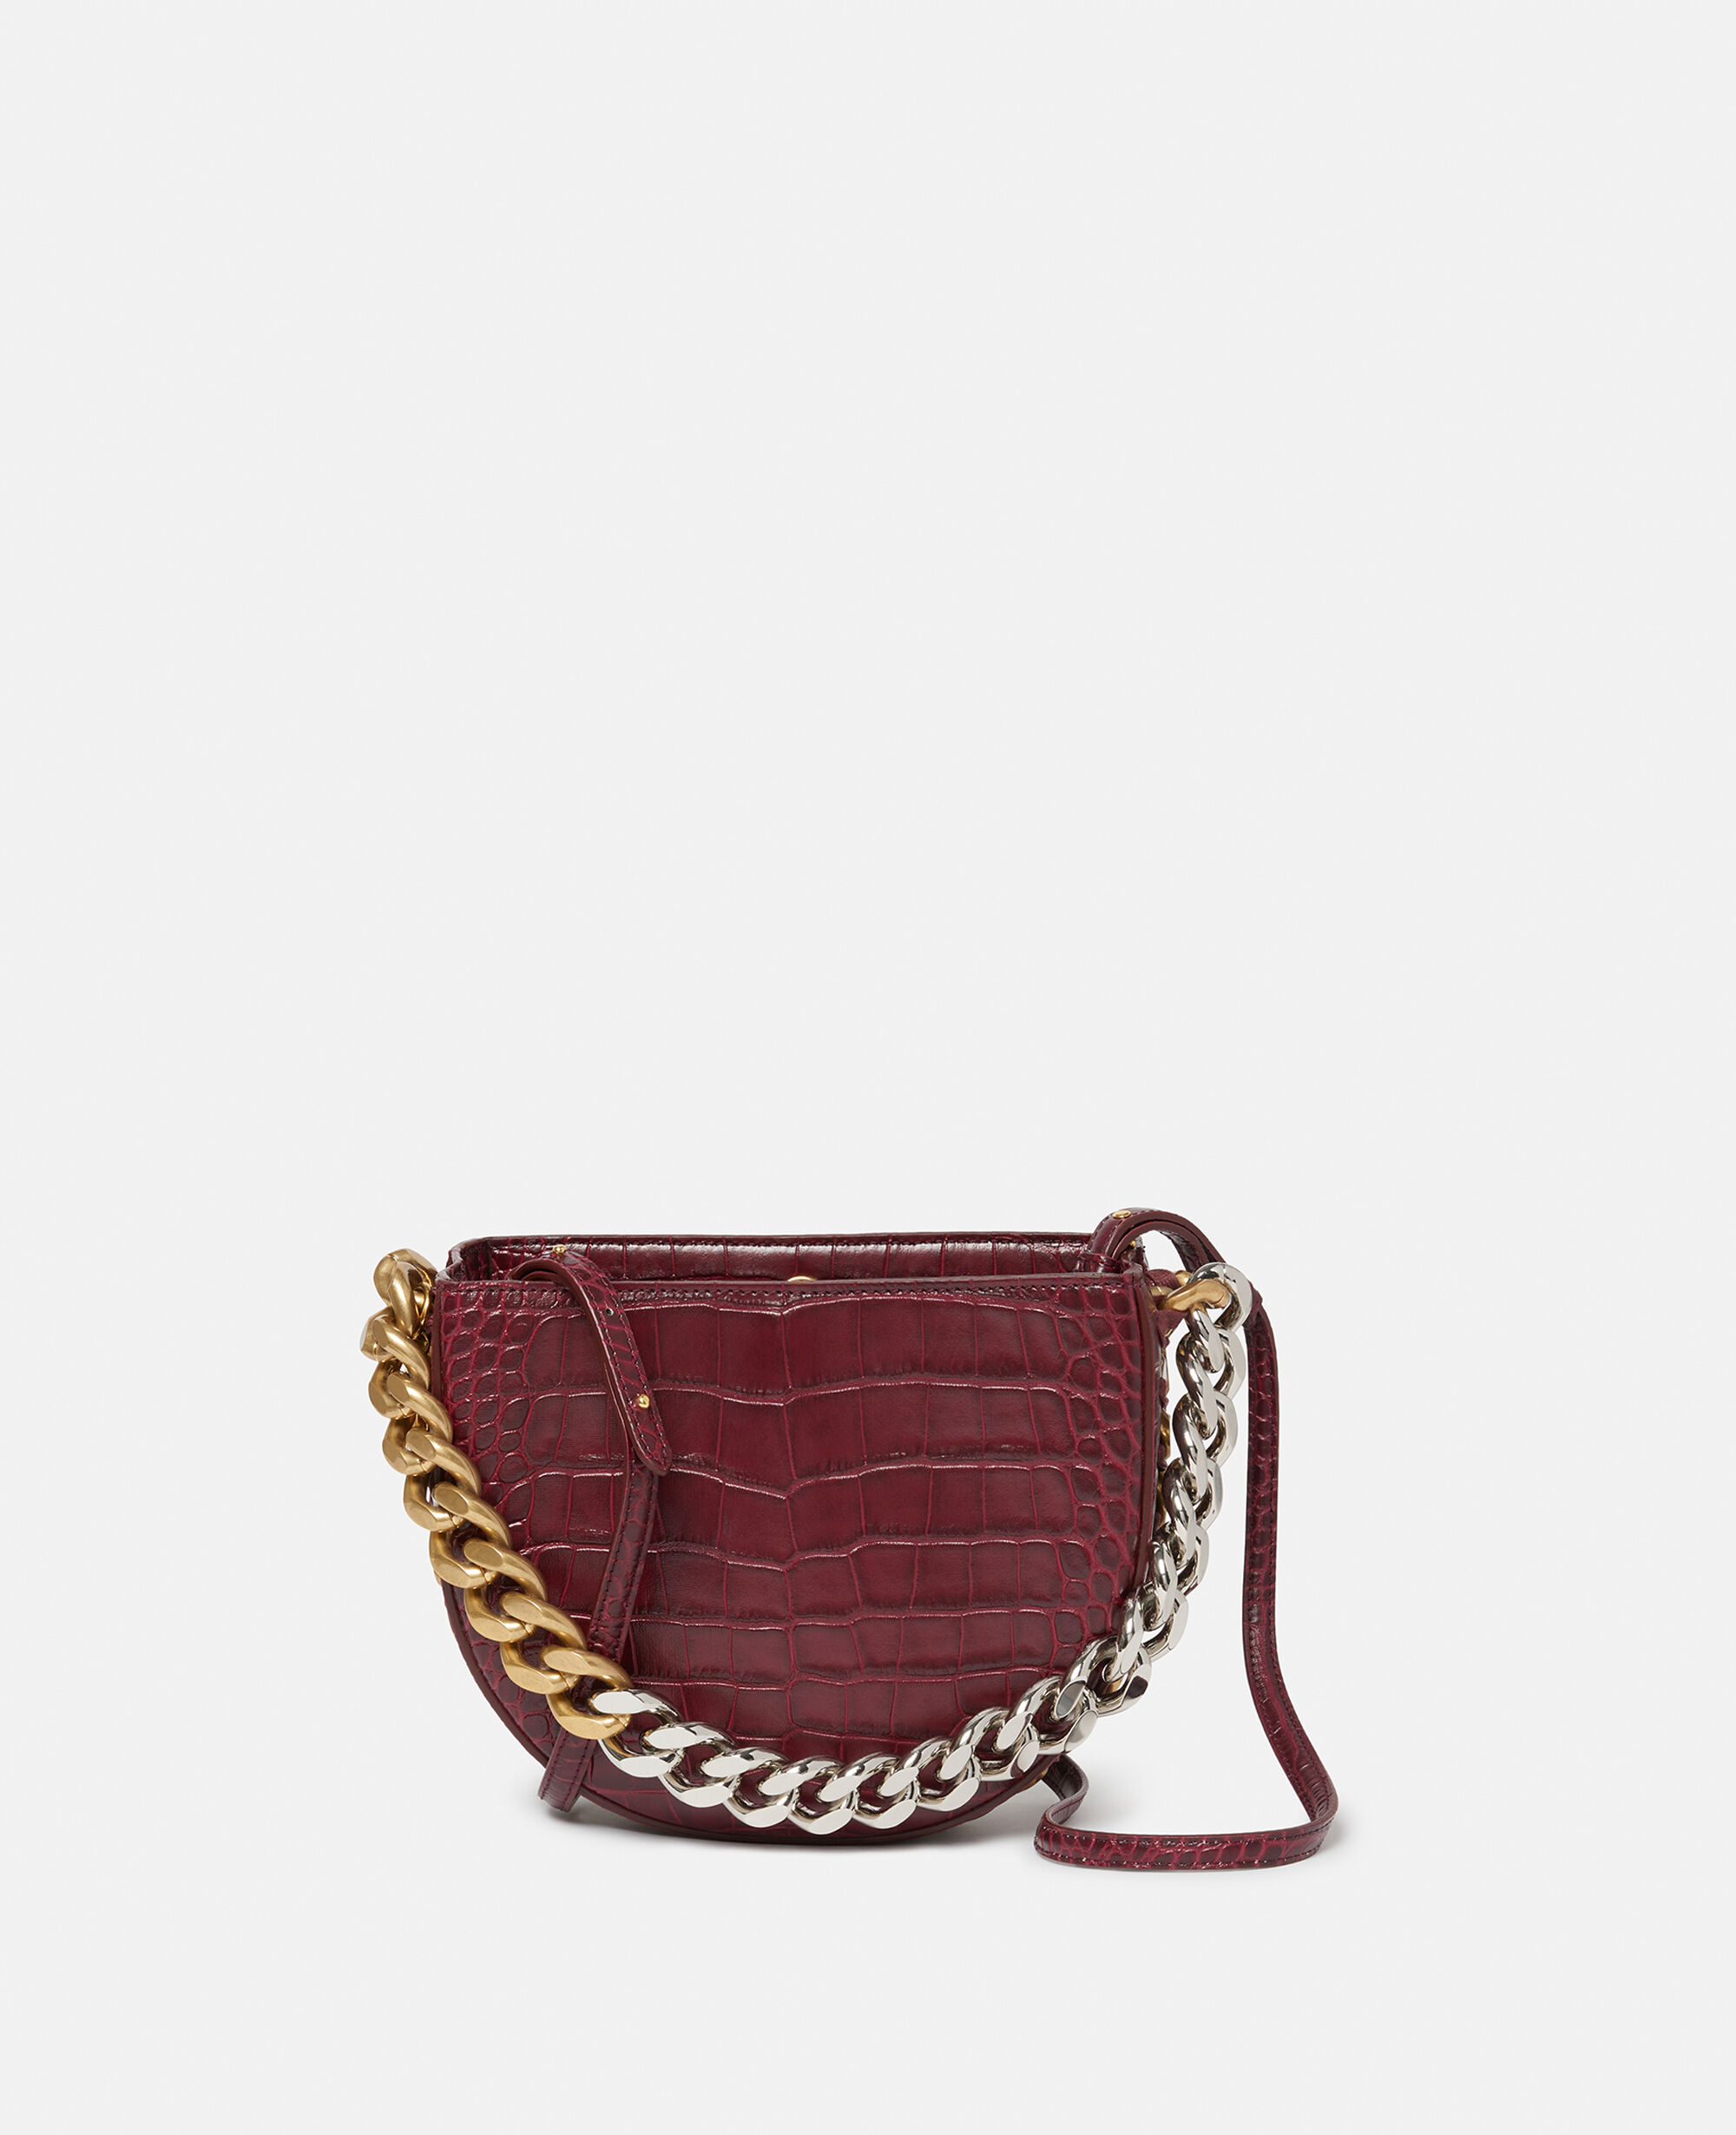 Little felt purse with a girl motive Burgundy